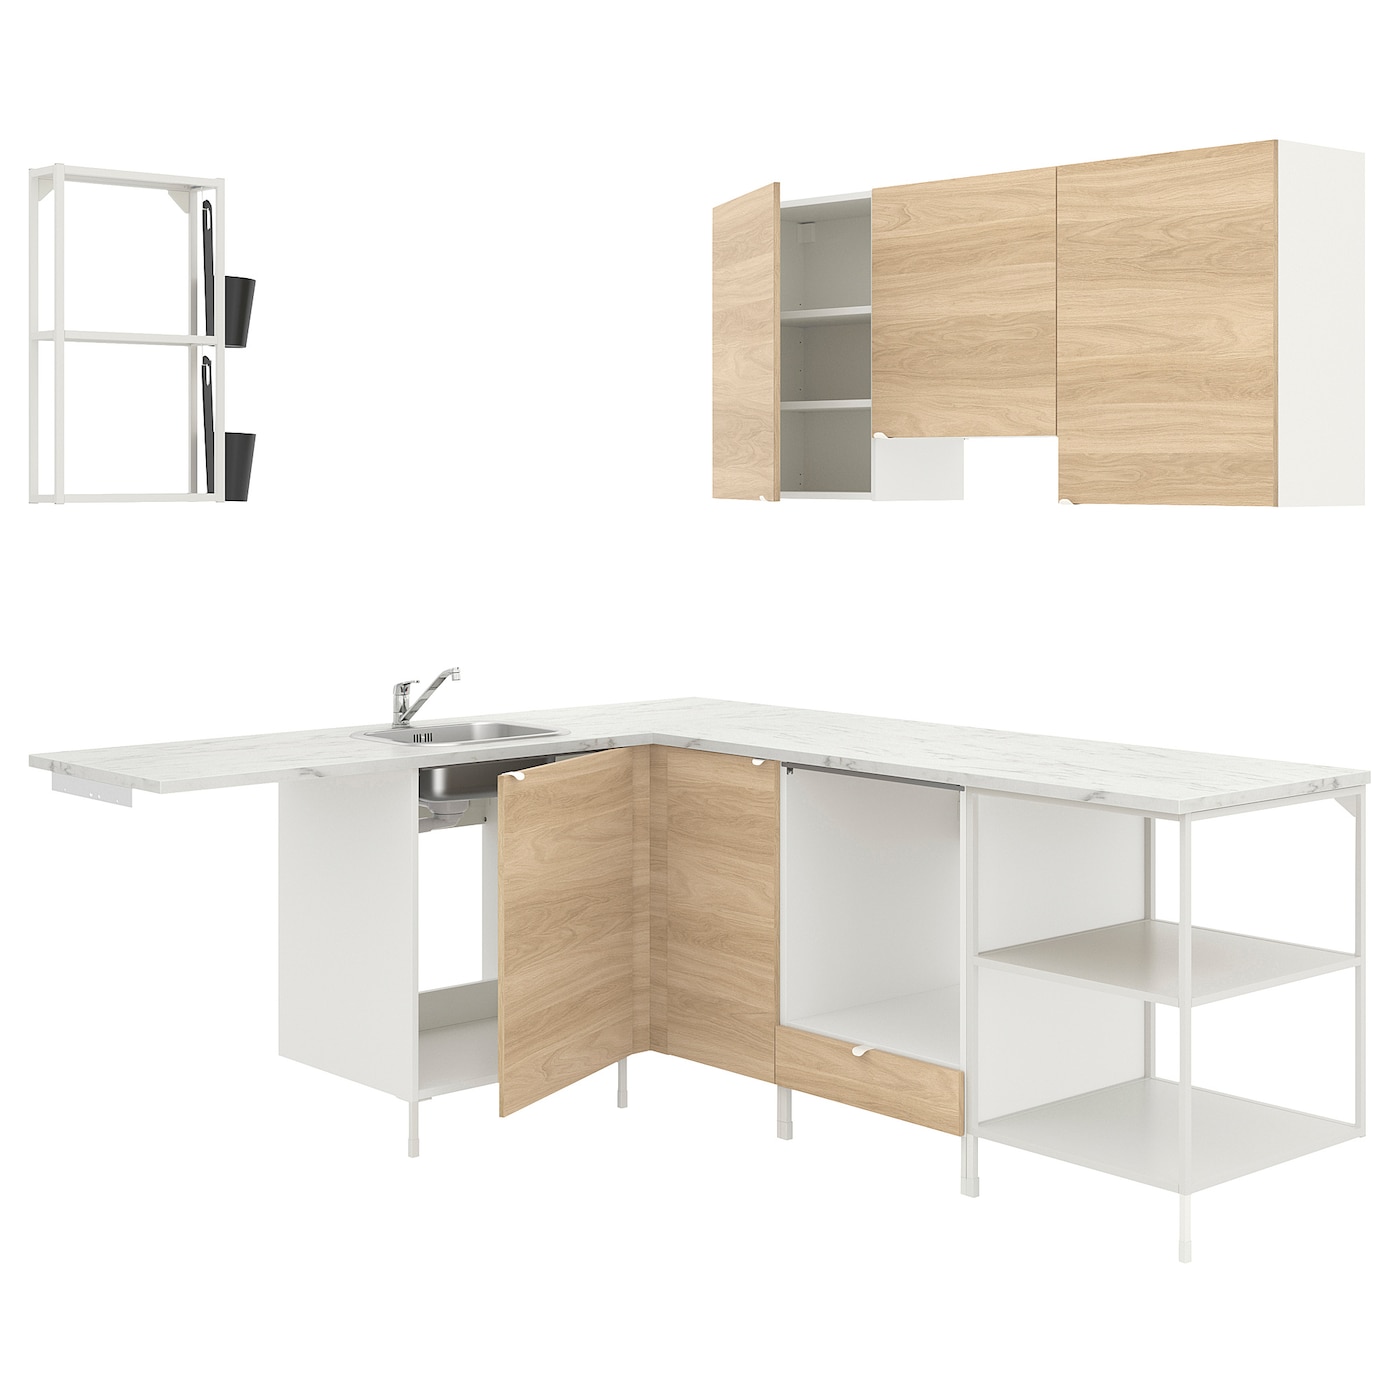 Кухонная комбинация угловая - ENHET  IKEA/ ЭНХЕТ ИКЕА, 190,5х228,5х75 см, белый/черный